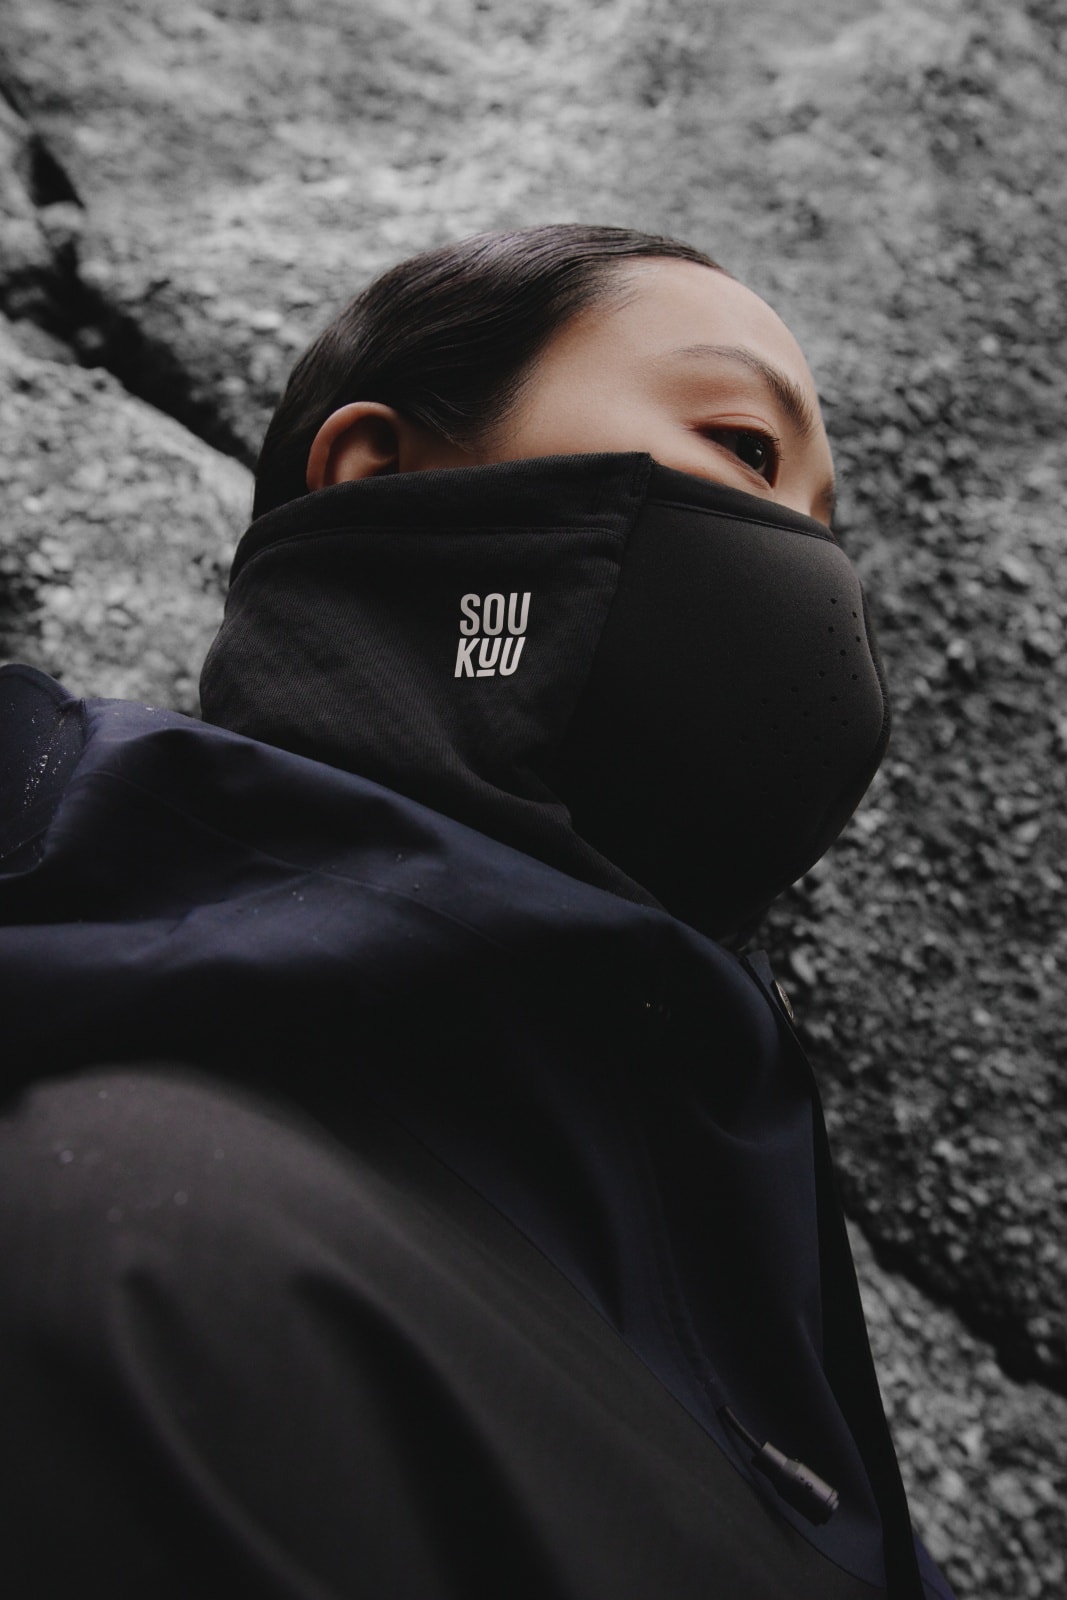 The North Face x UNDERCOVER 最新聯名系列「SOUKUU」台灣發售情報